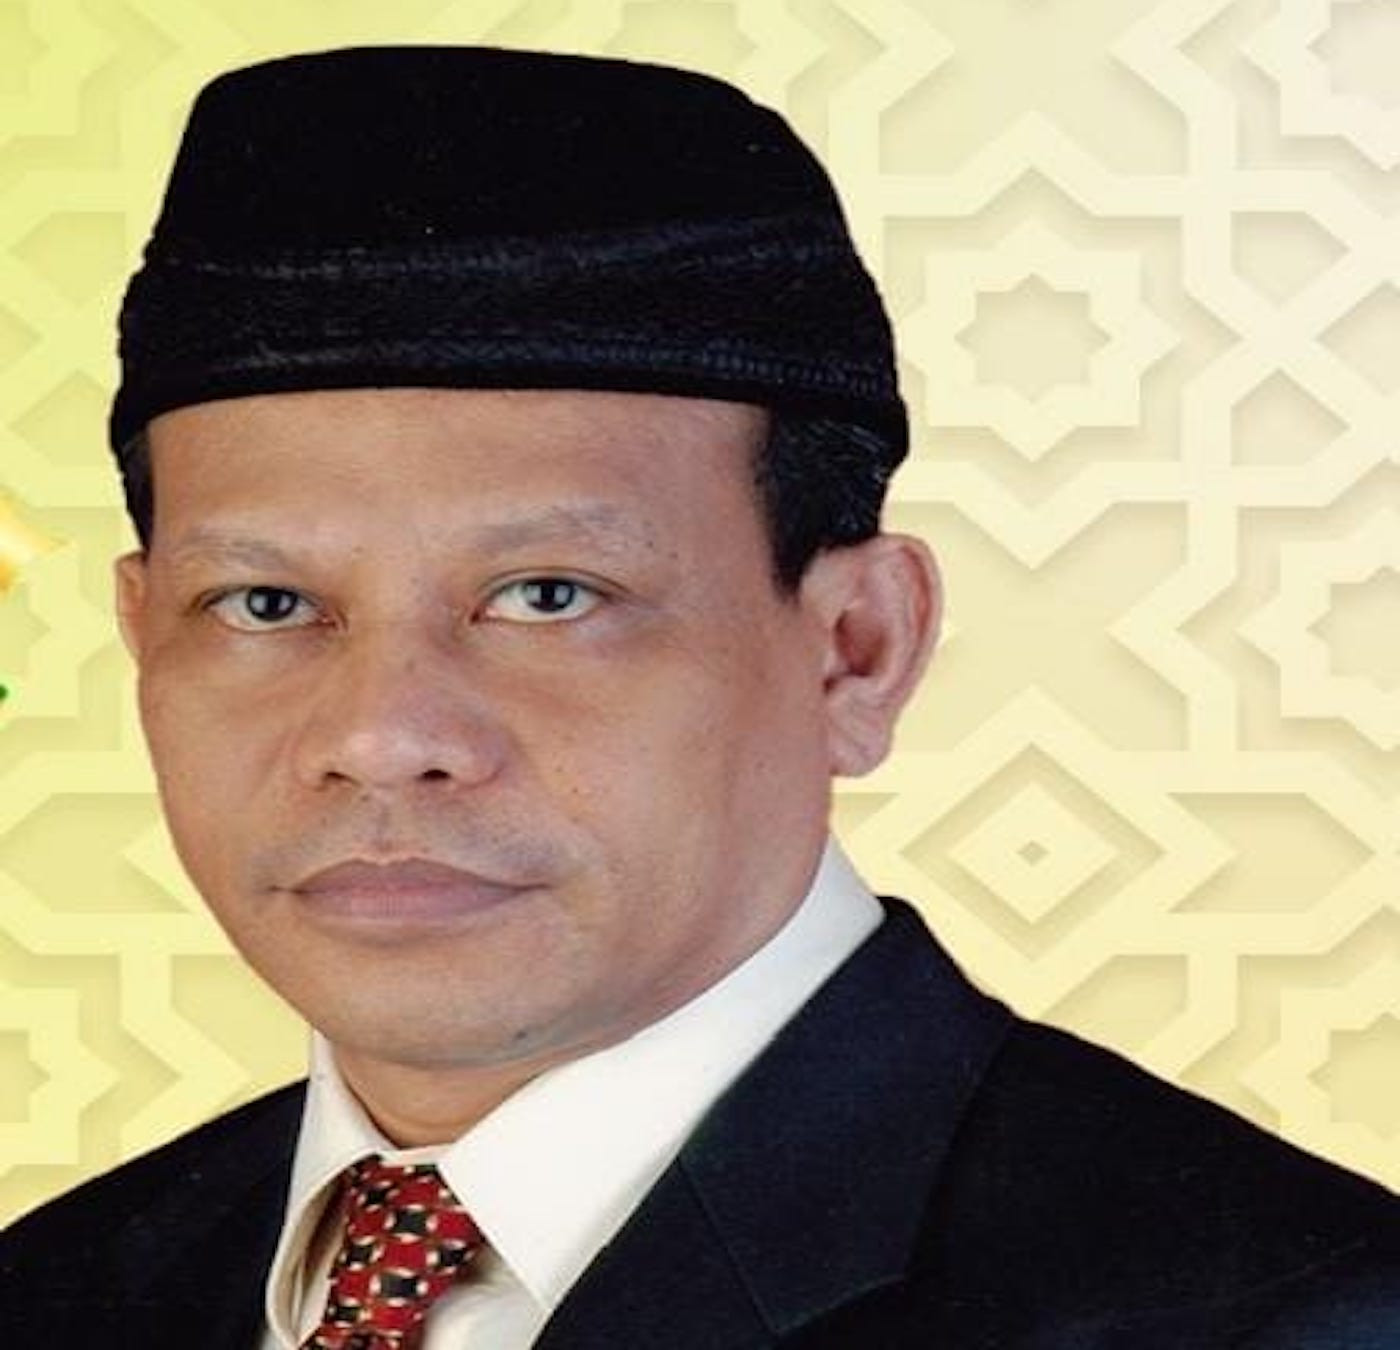 Putra Werpigan Fakfak Diusulkan Jadi Cawagub Dampingi Dominggus Mandacan di Pilgub Papua Barat - JPNN.com Papua